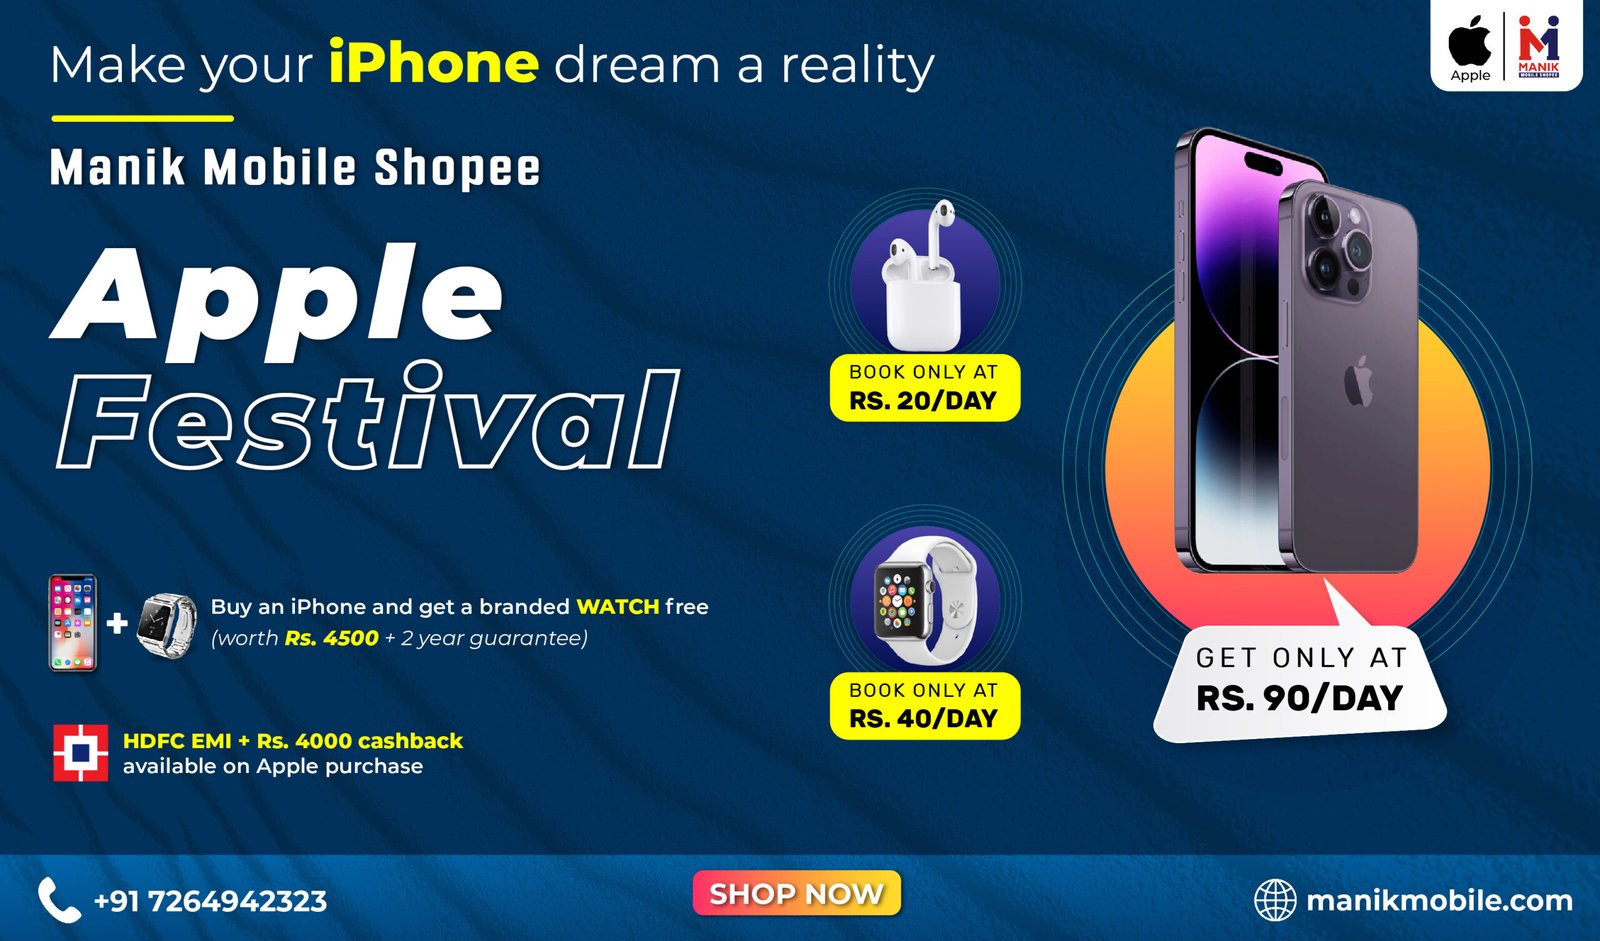 Apple Festival at Manik Mobile Shopee